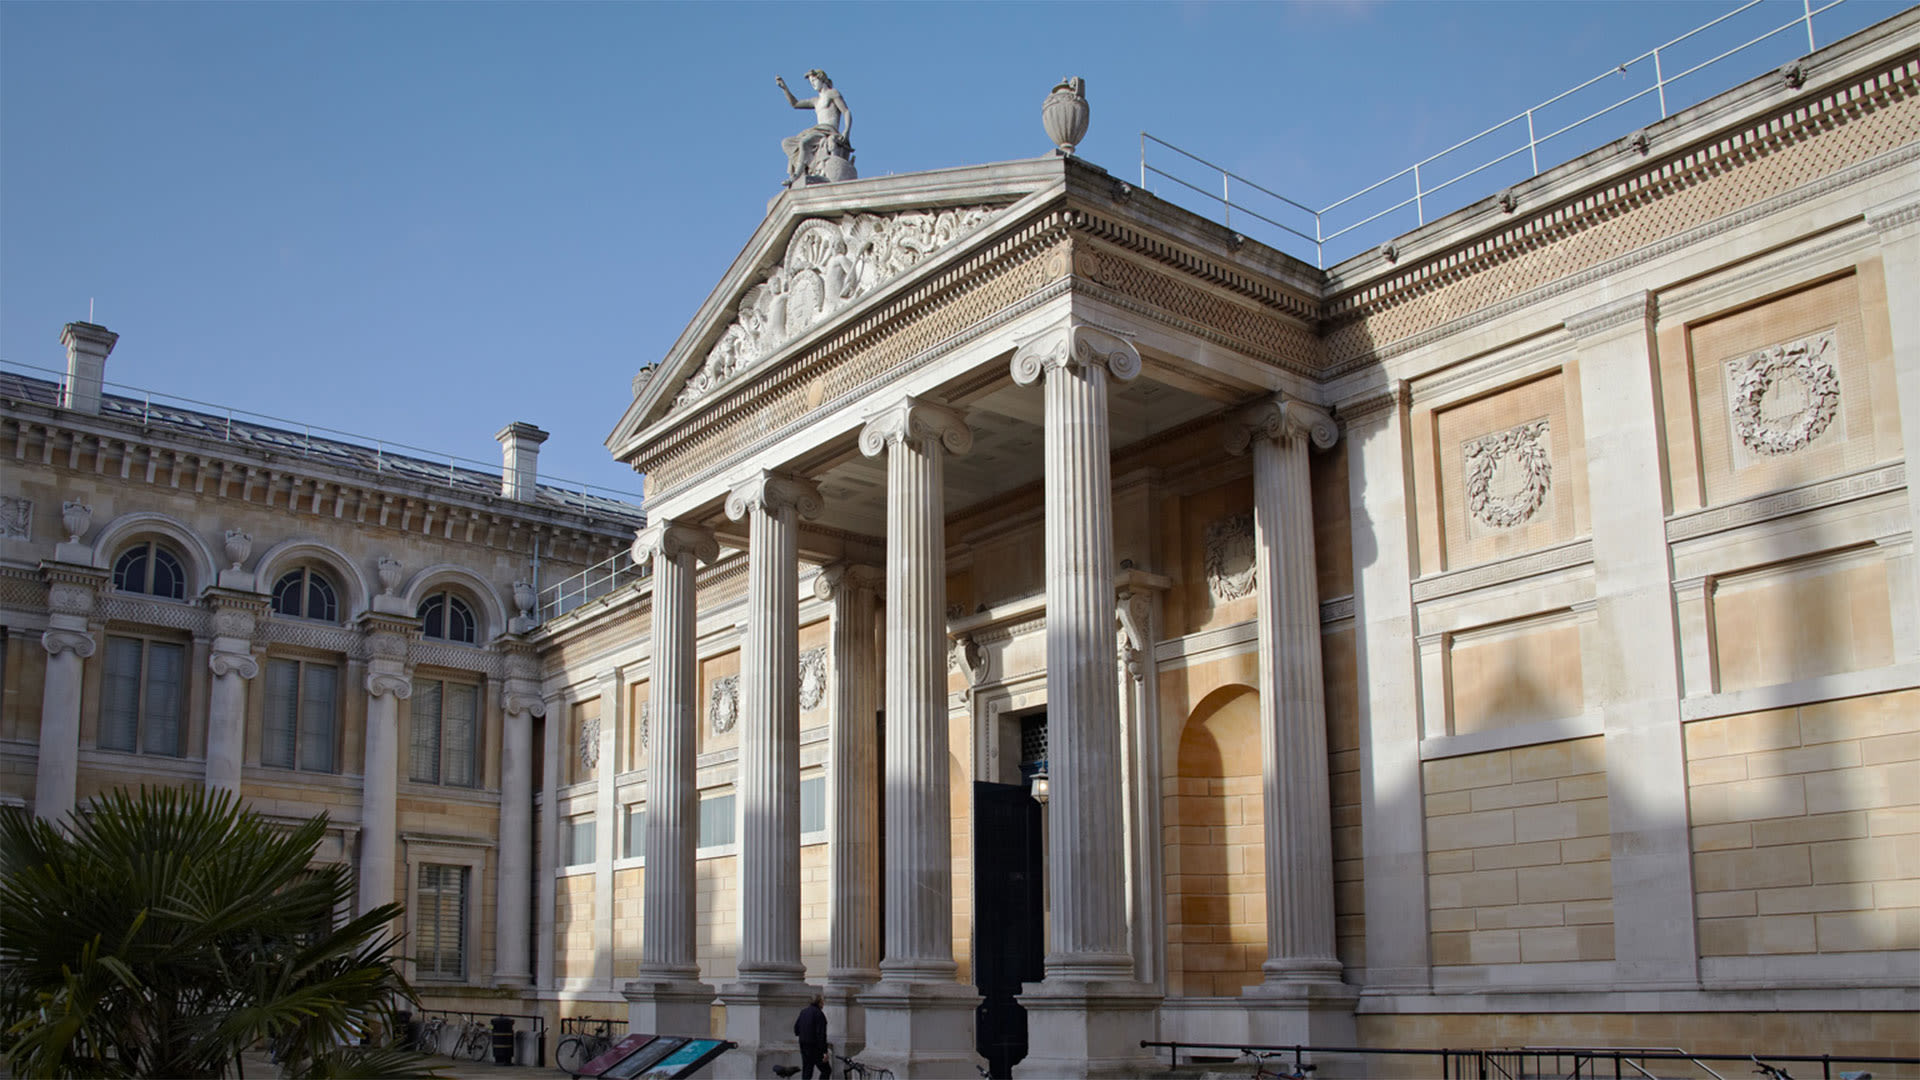 Ashmolean Museum in Oxford